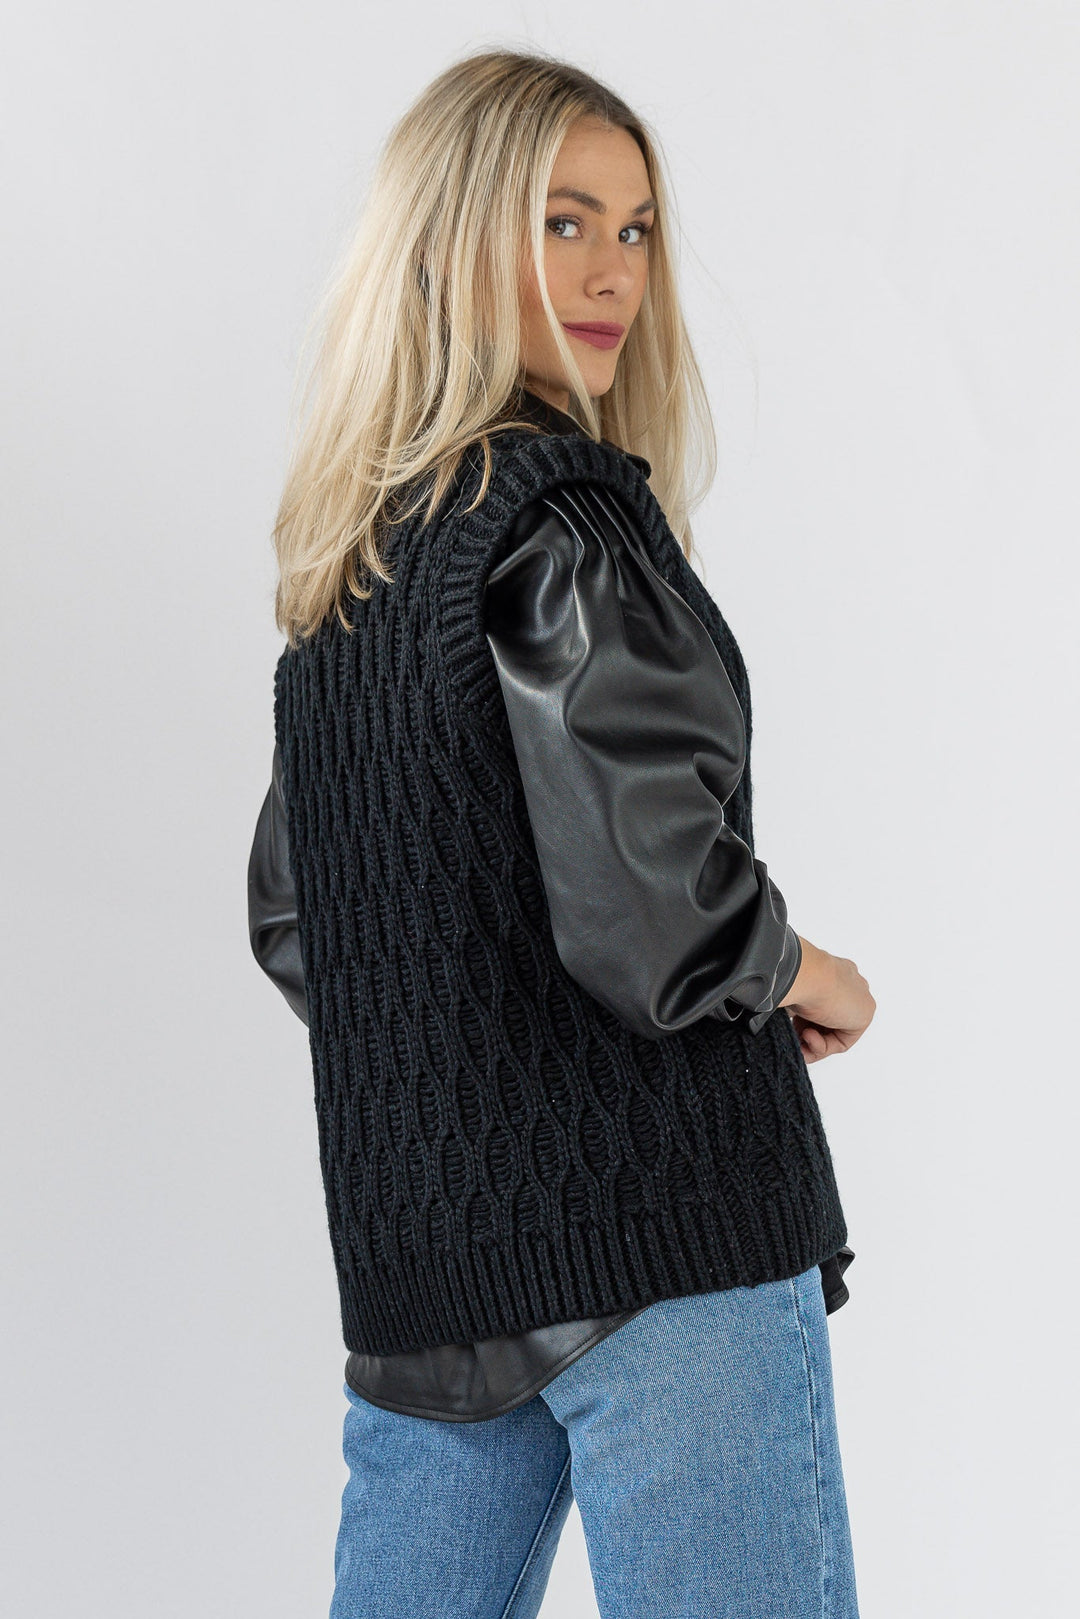 Cozy Chalet Sweater Vest - Black - JO+CO